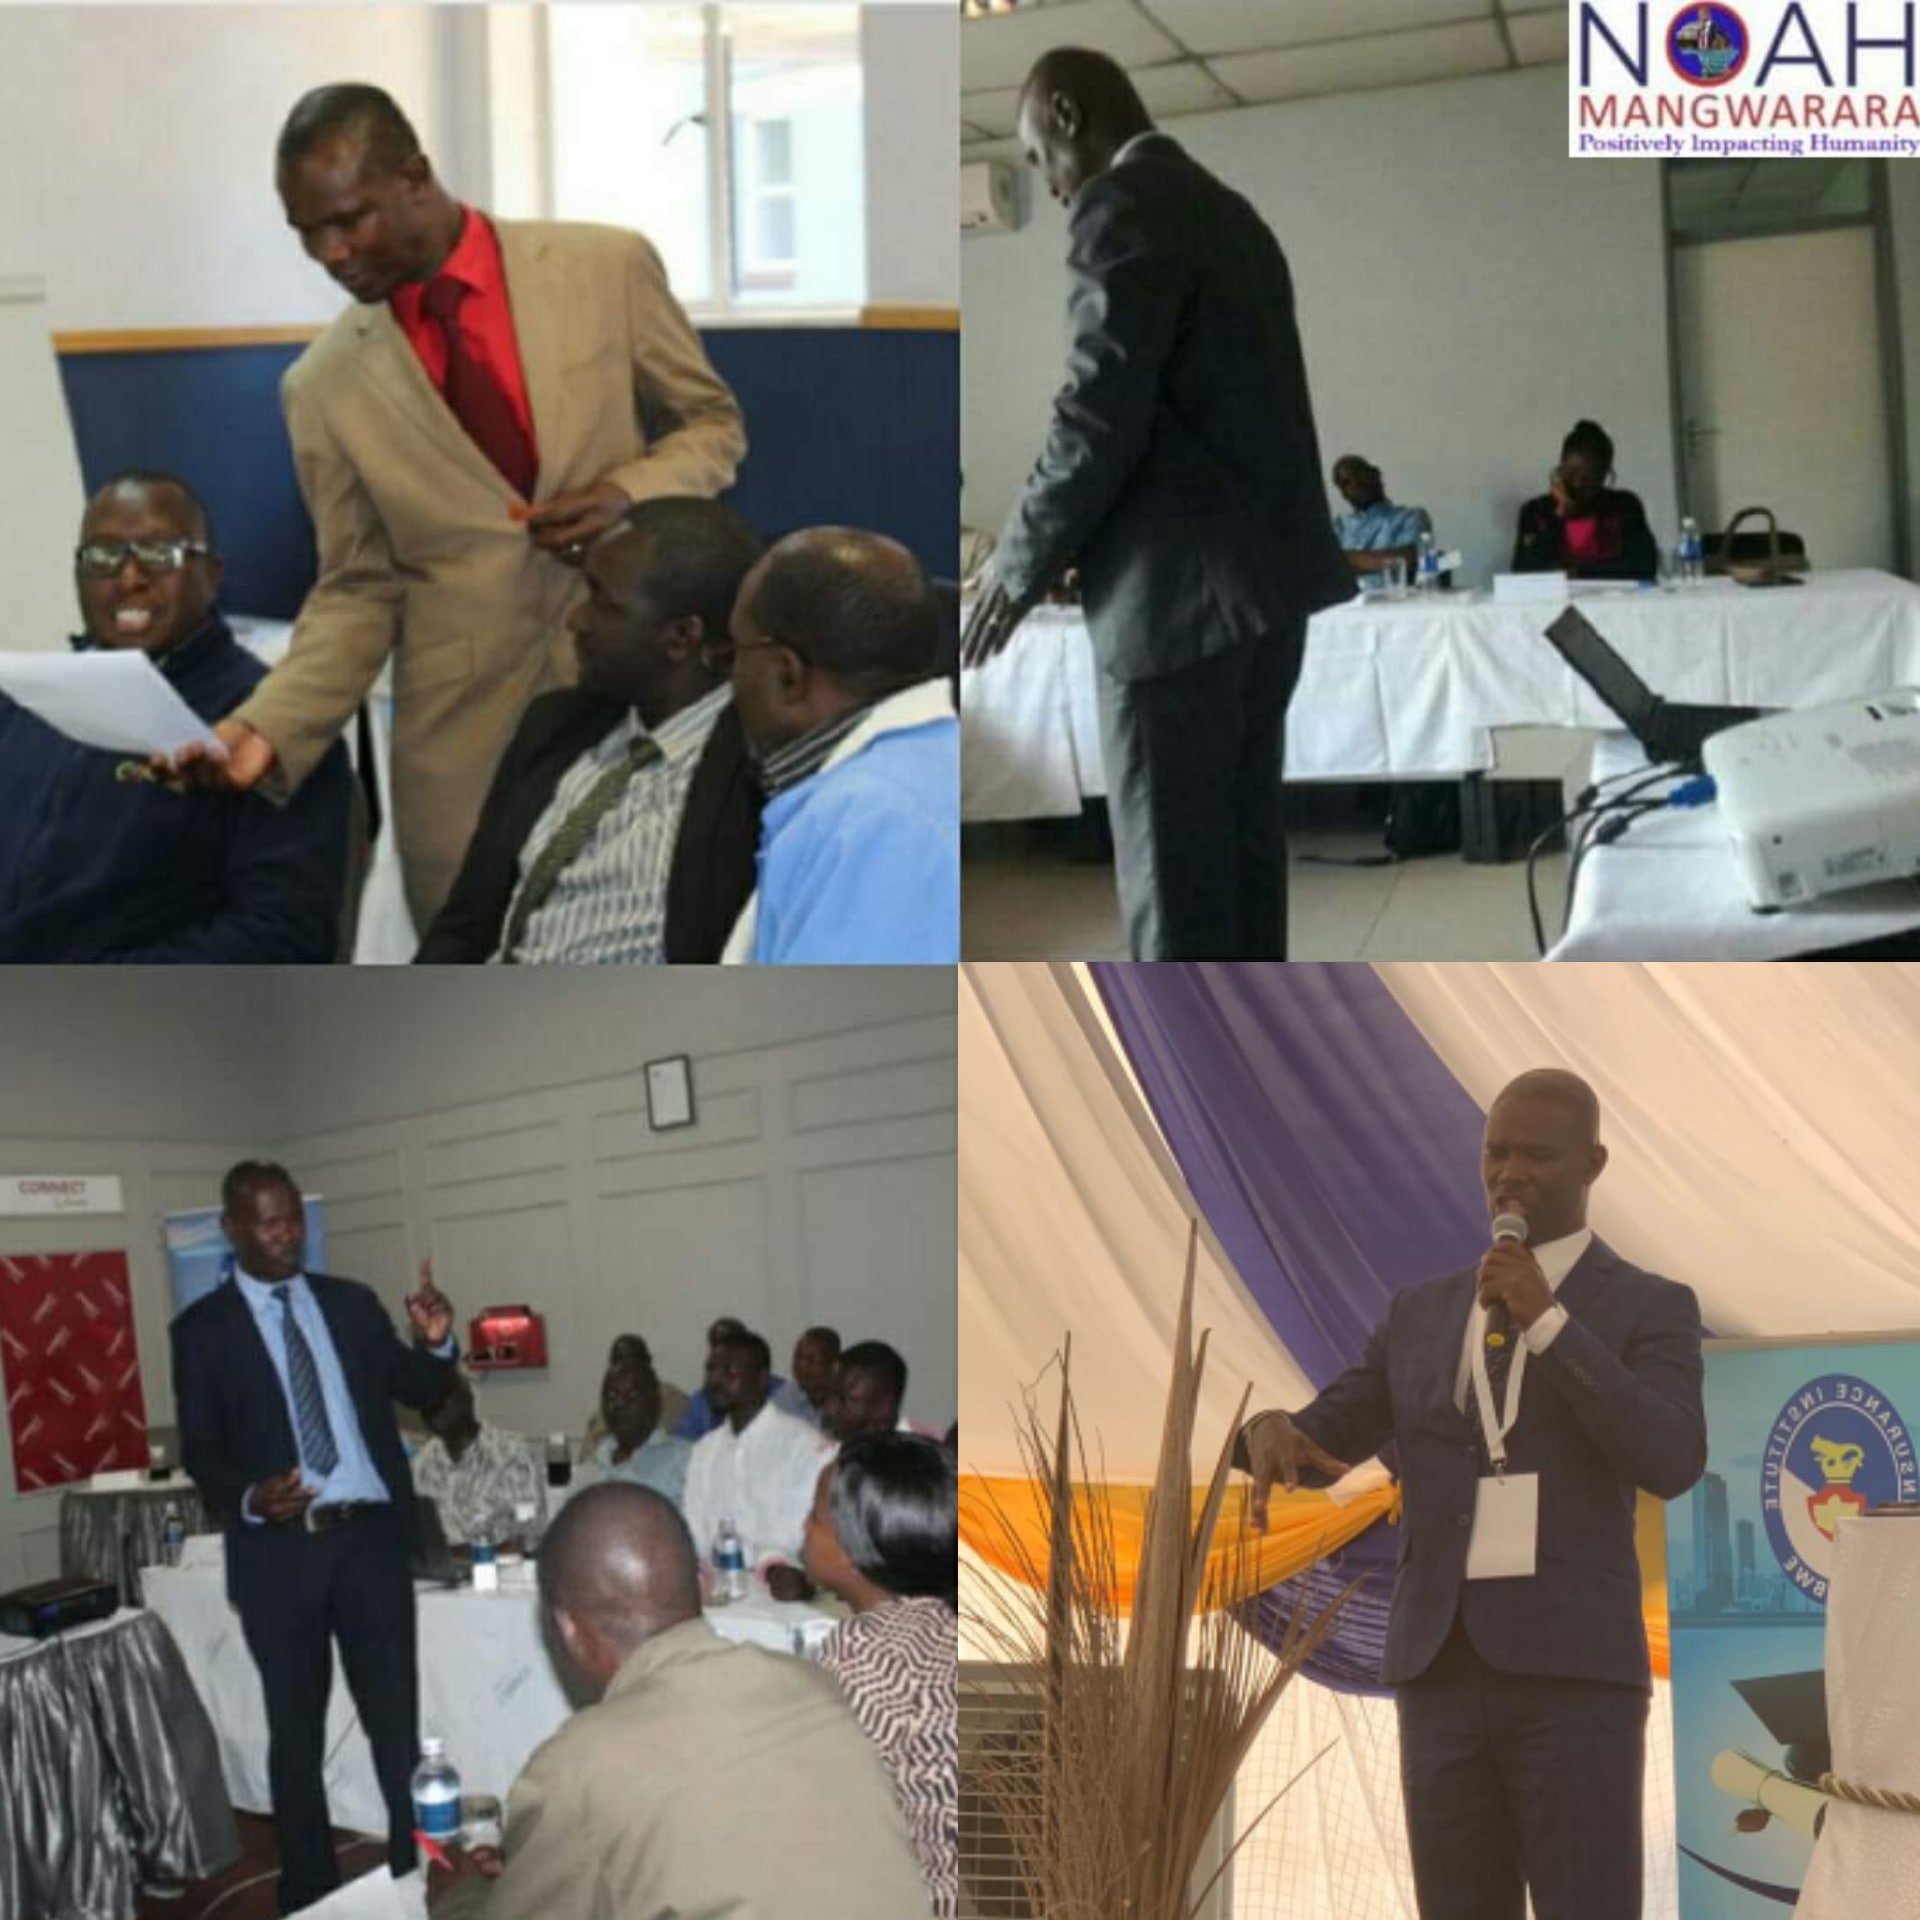 Noah Mangwarara Board Training Induction Harare Zimbabwe